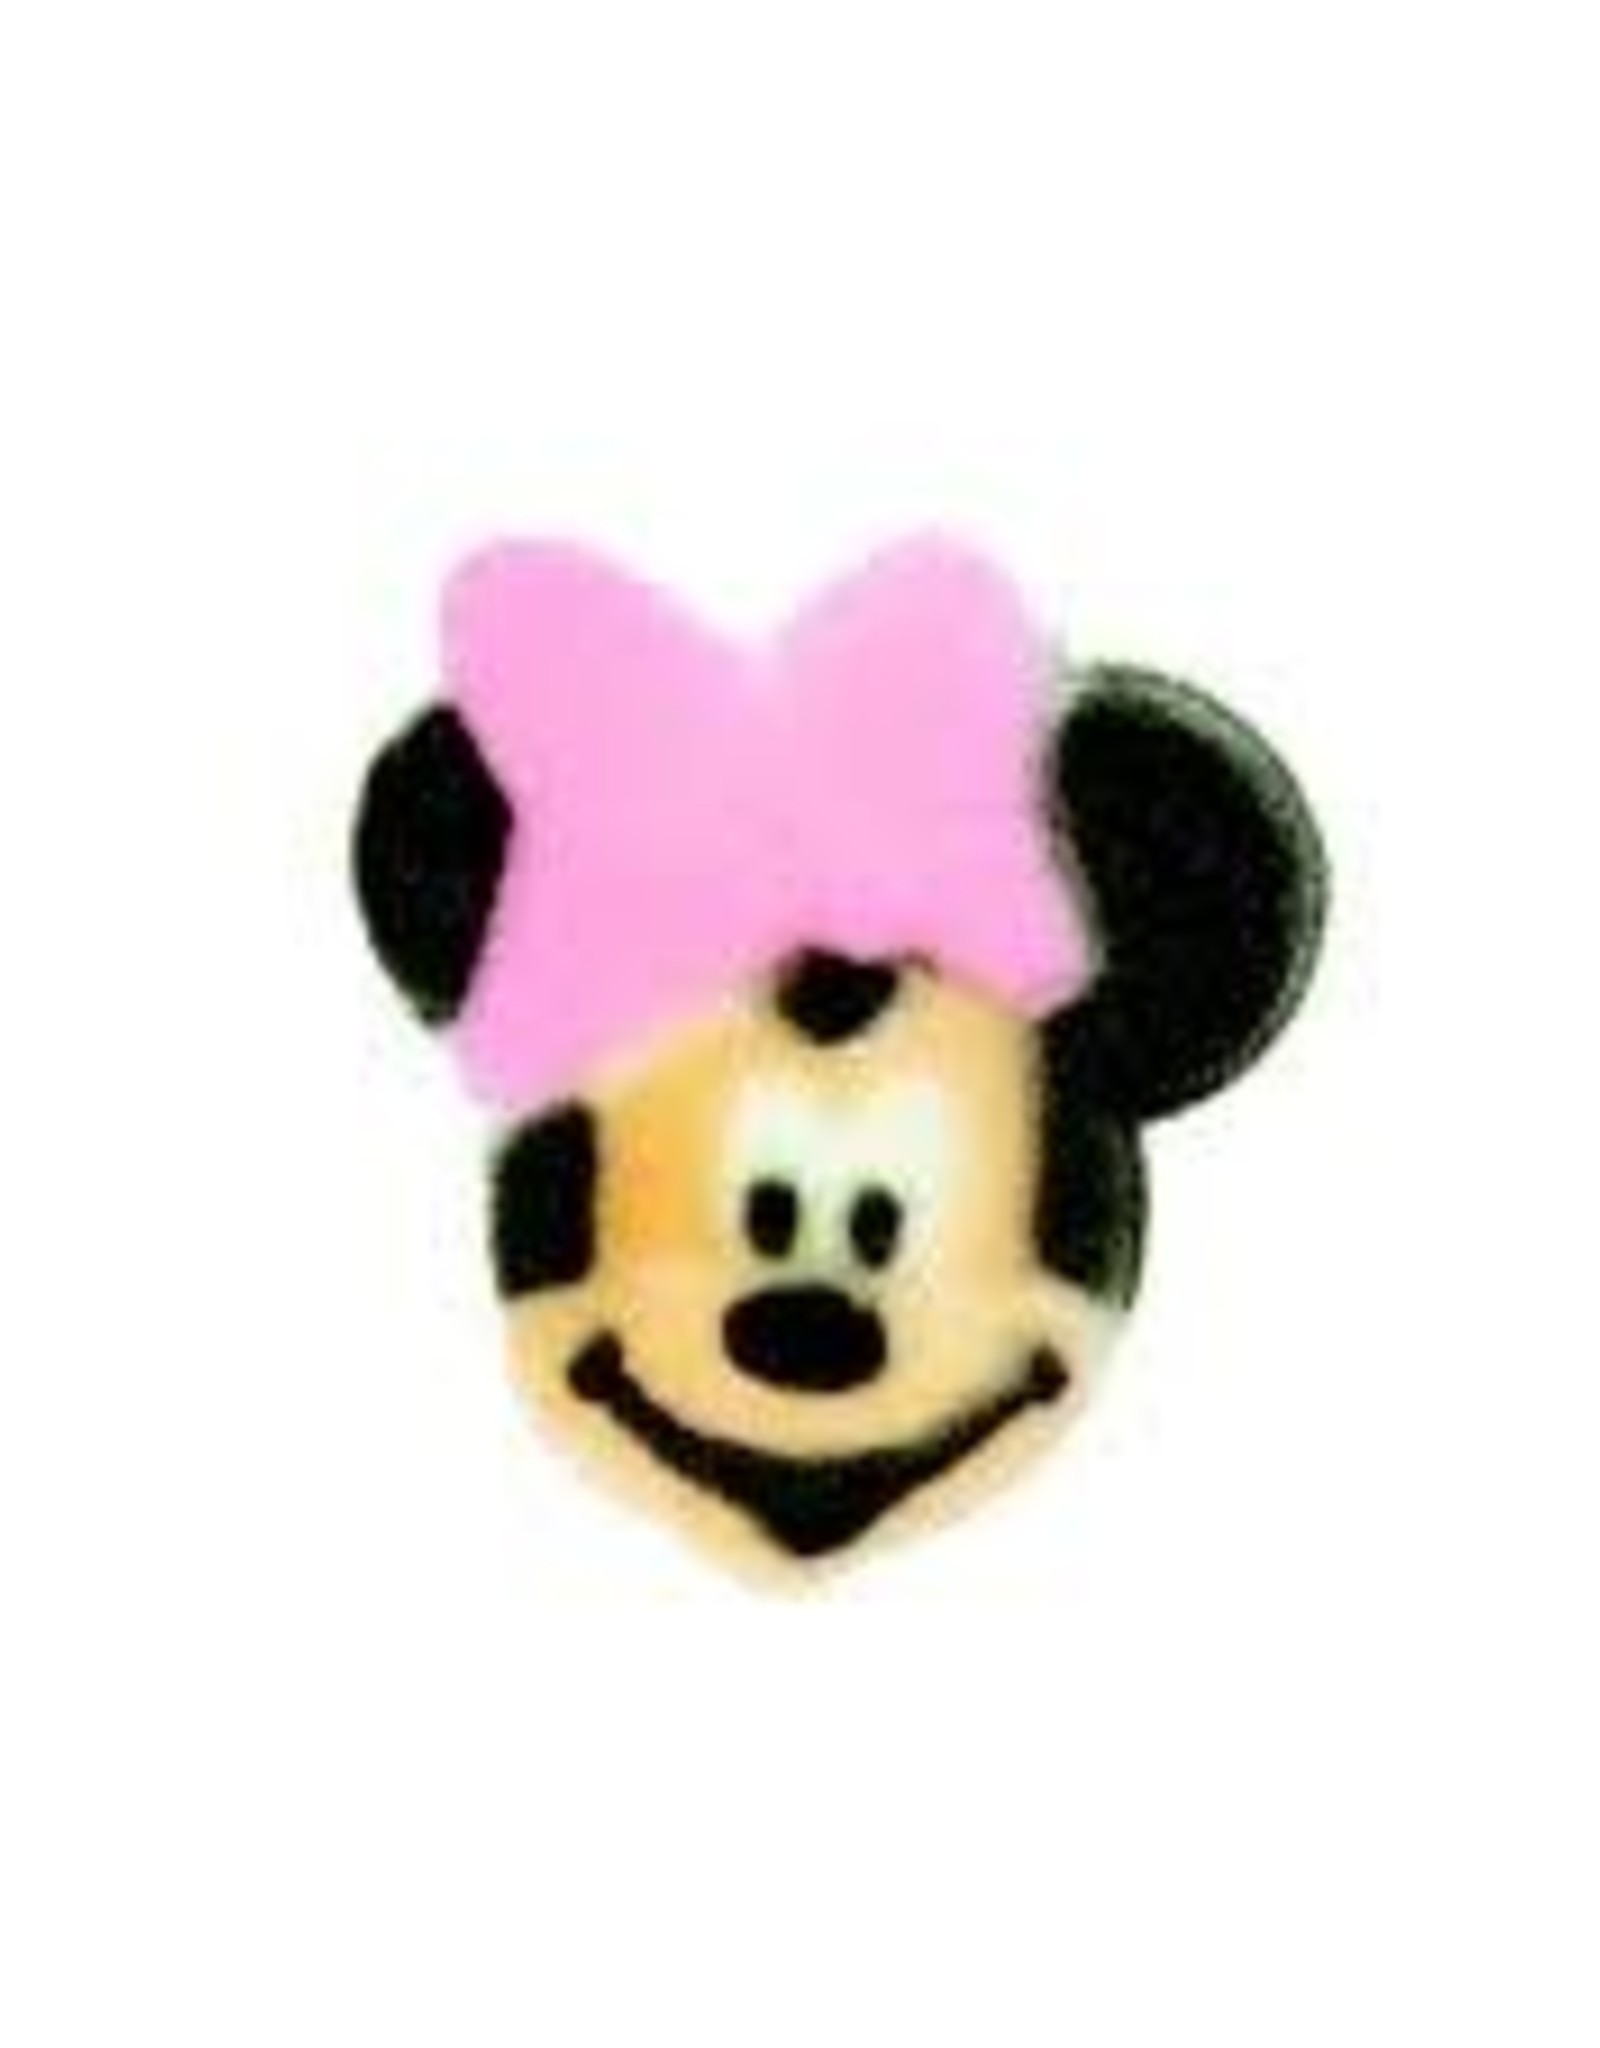 Minnie Mouse Sugar Dec Ons